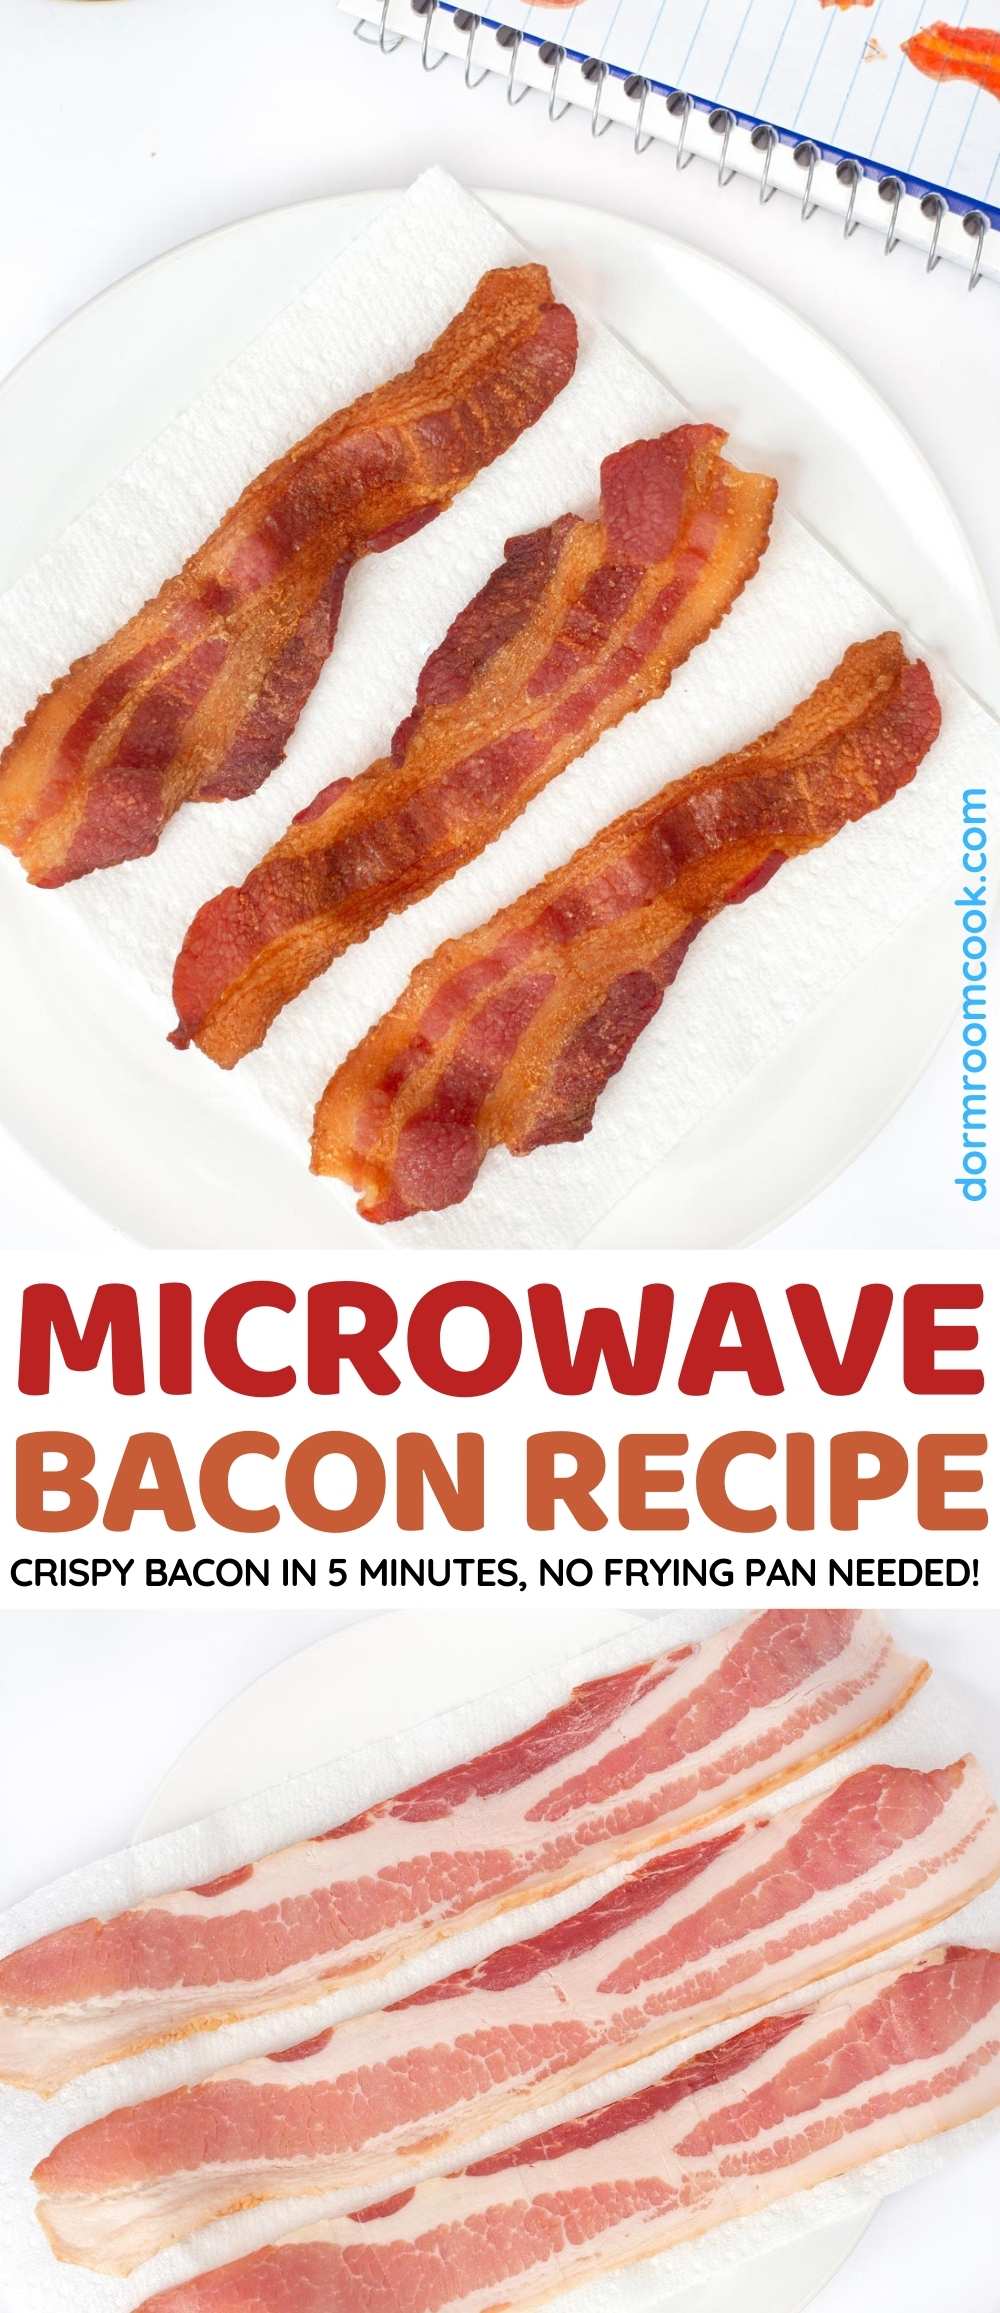 https://dormroomcook.com/wp-content/uploads/2022/01/Microwave-Bacon-L.jpg